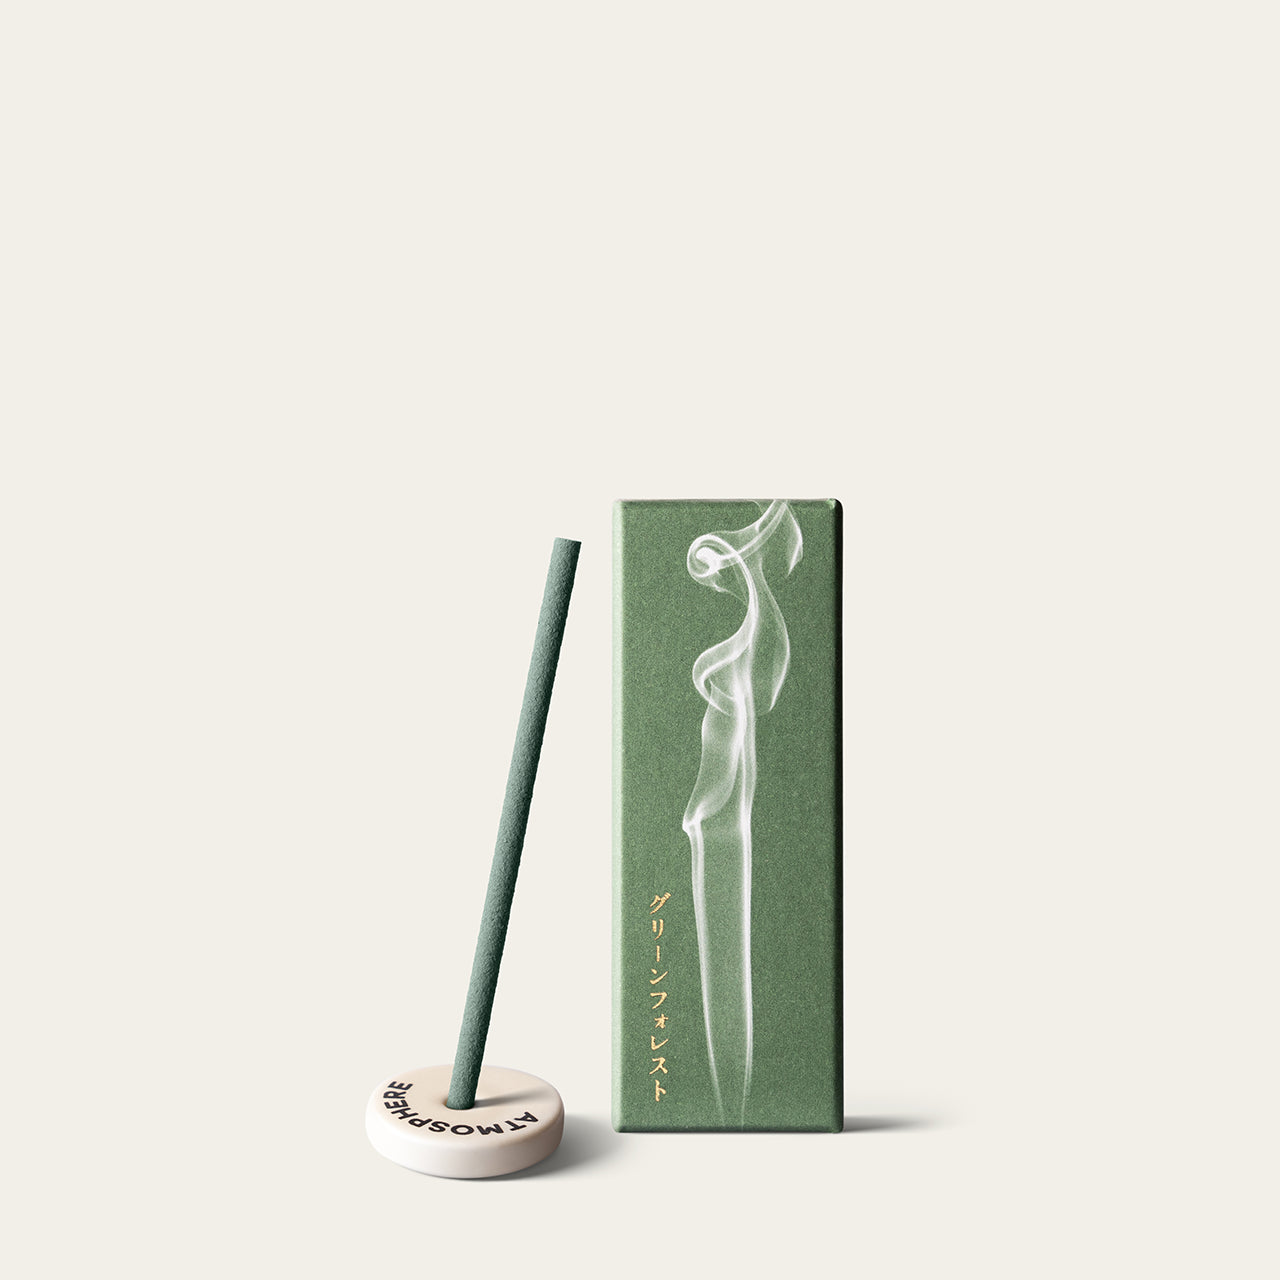 Kyukyodo Fragrance Mini Green Forest Japanese incense sticks (20 sticks) with Atmosphere ceramic incense holder